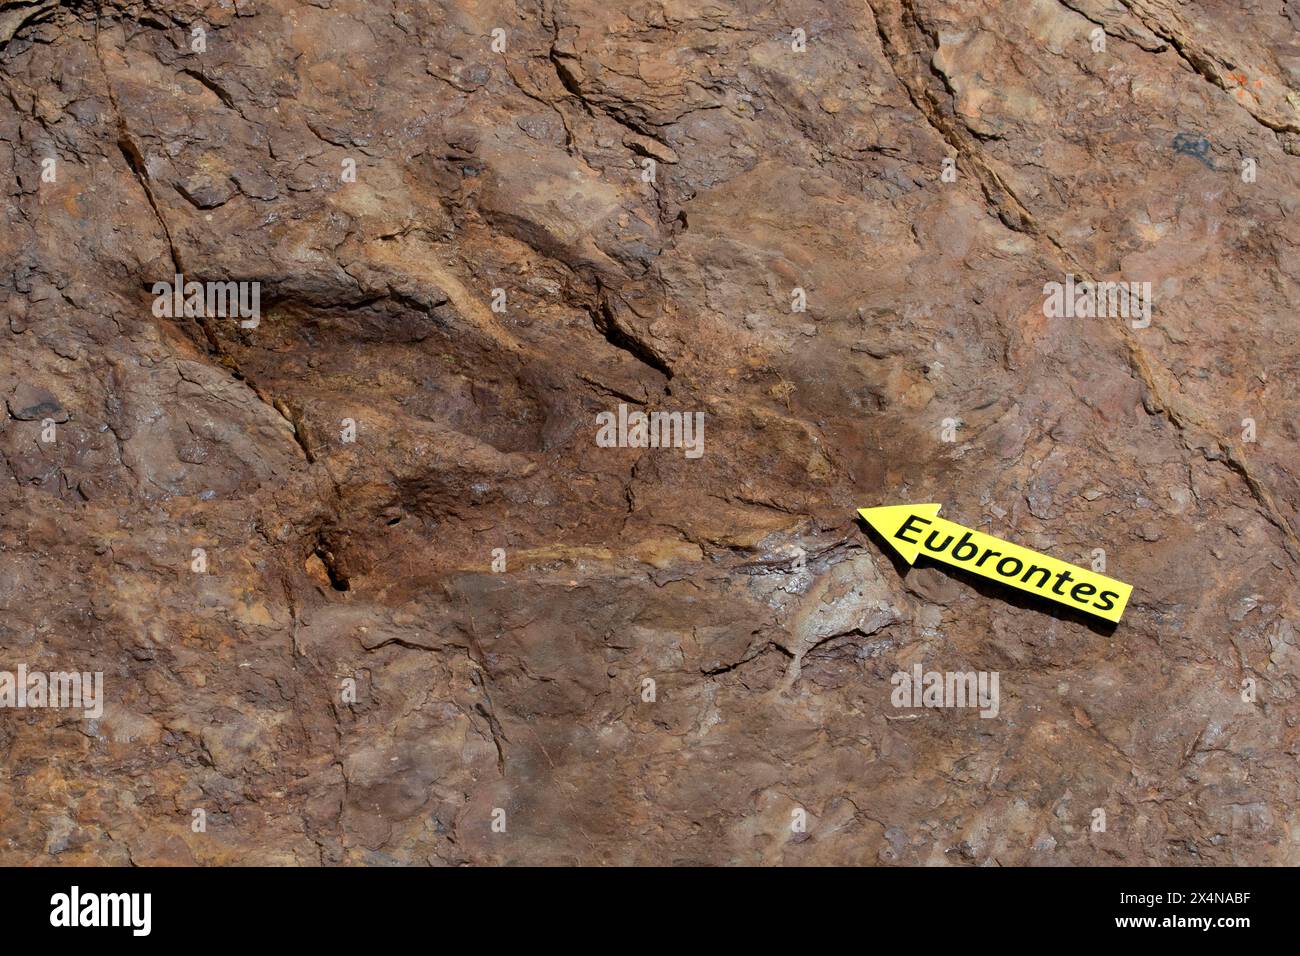 Eubrontes dinosaur track, St. George Dinosaur Discovery Site at Johnson Farm, St. George, Utah Stock Photo